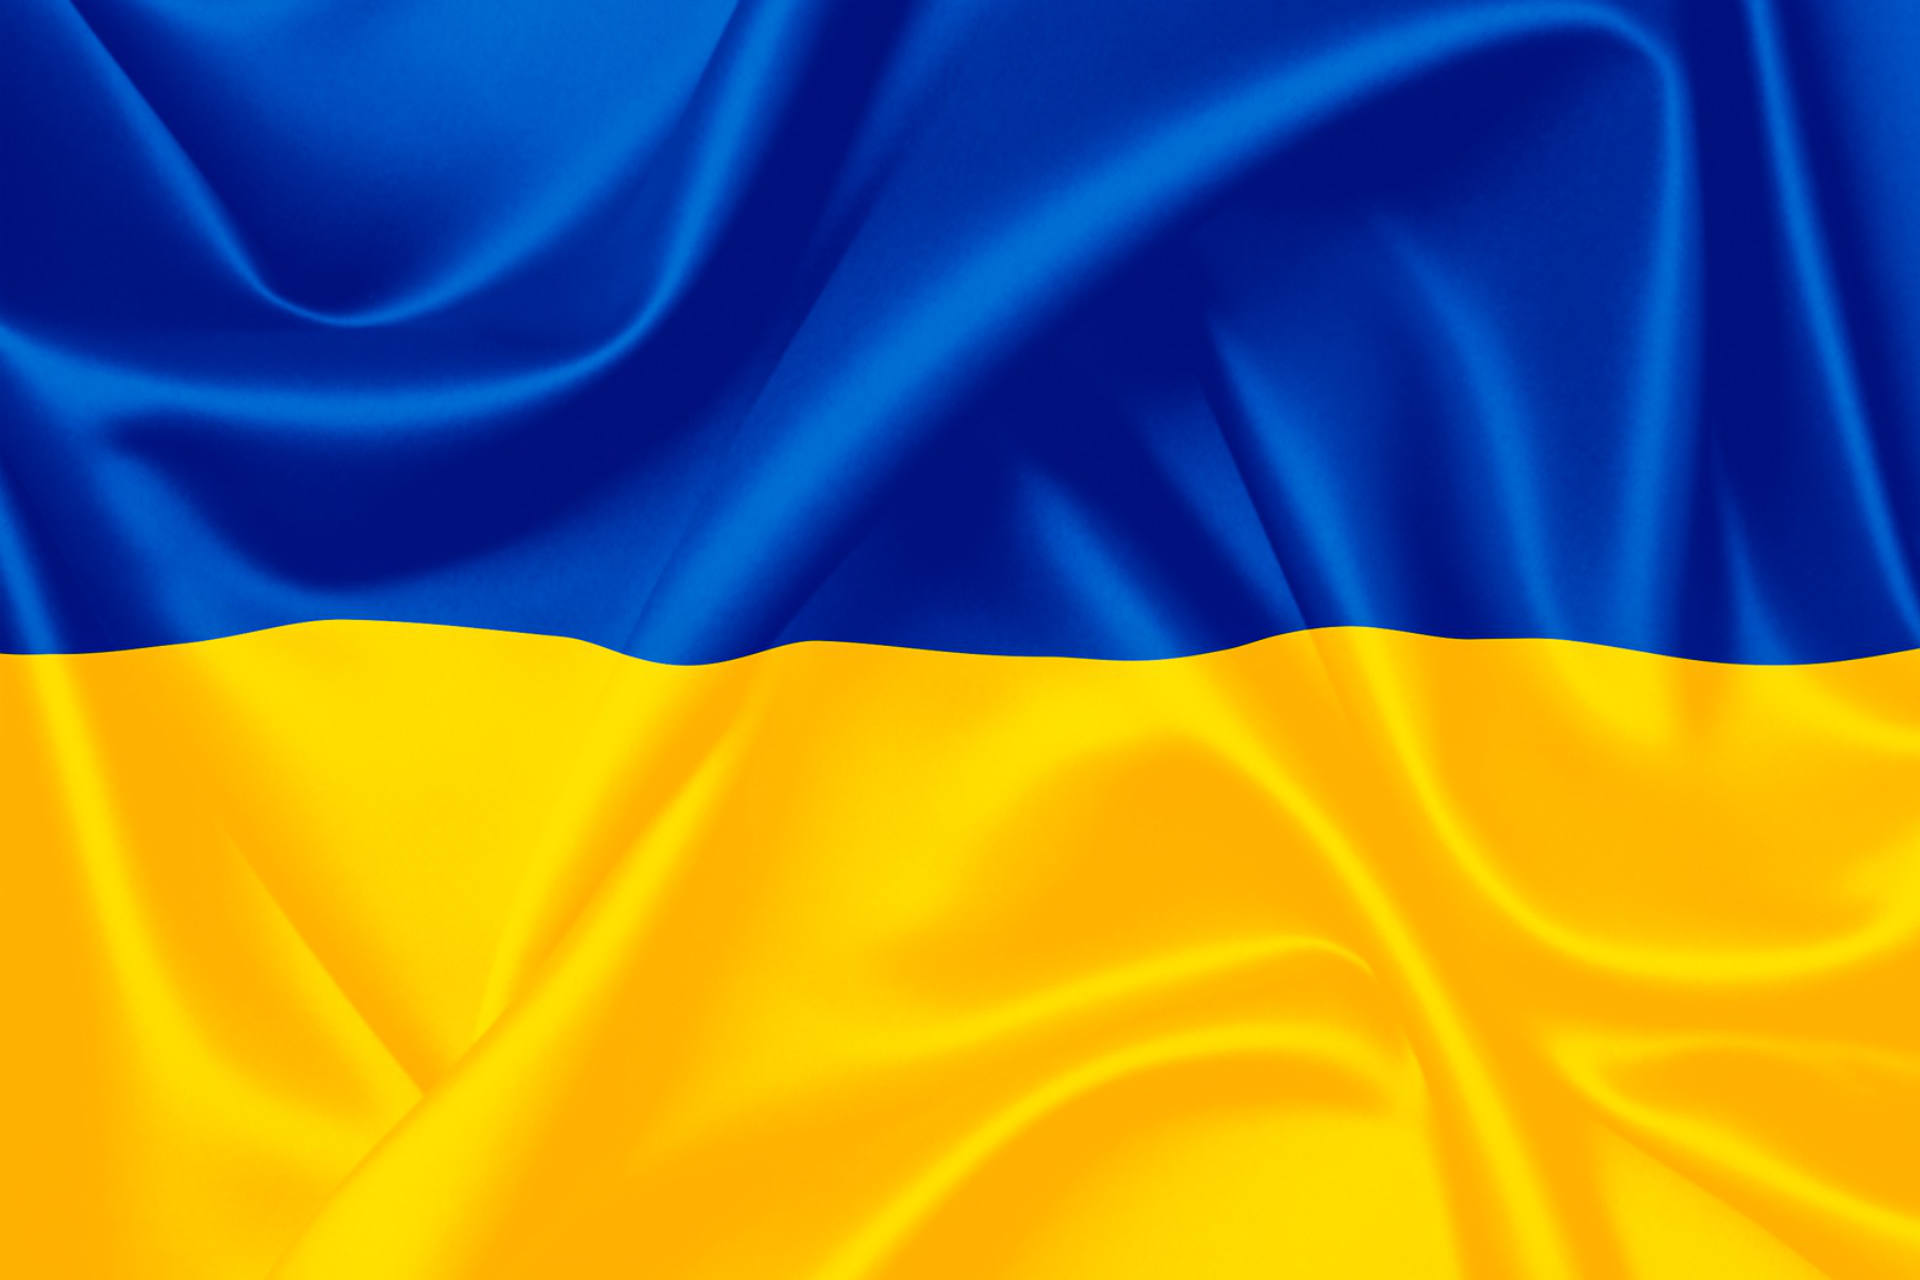 Update on Irish Government Travel Advice on Ukraine